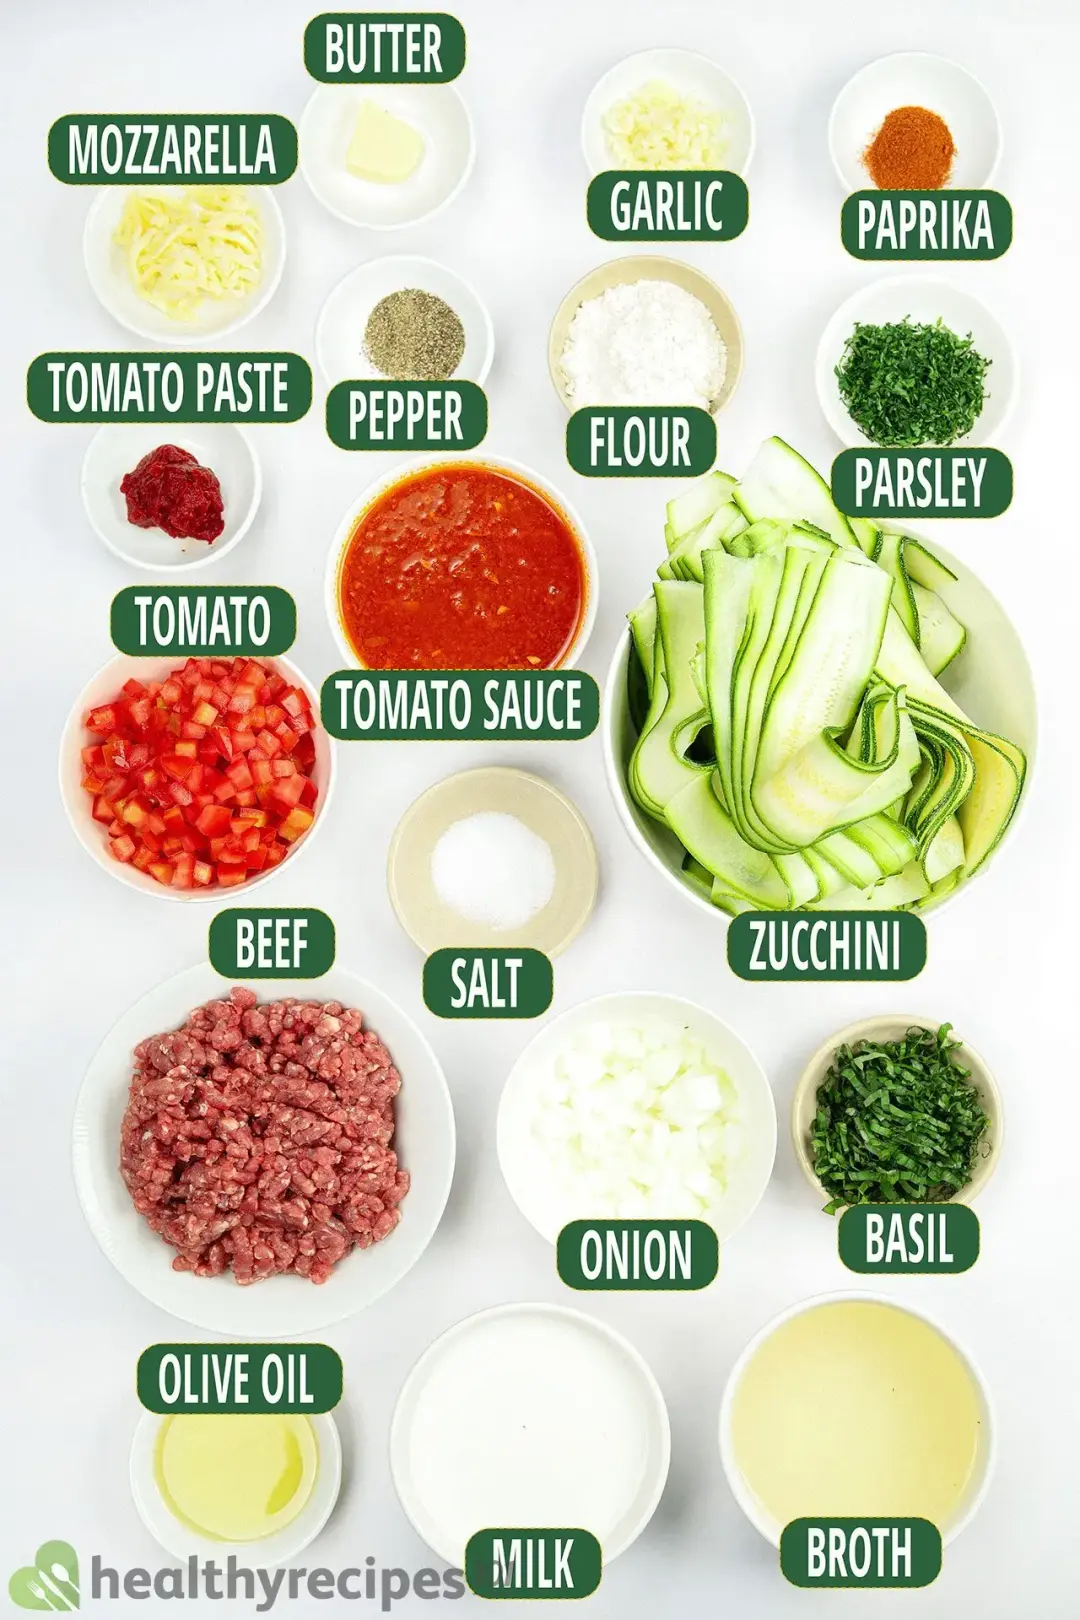 Ingredients for Zucchini Lasagna